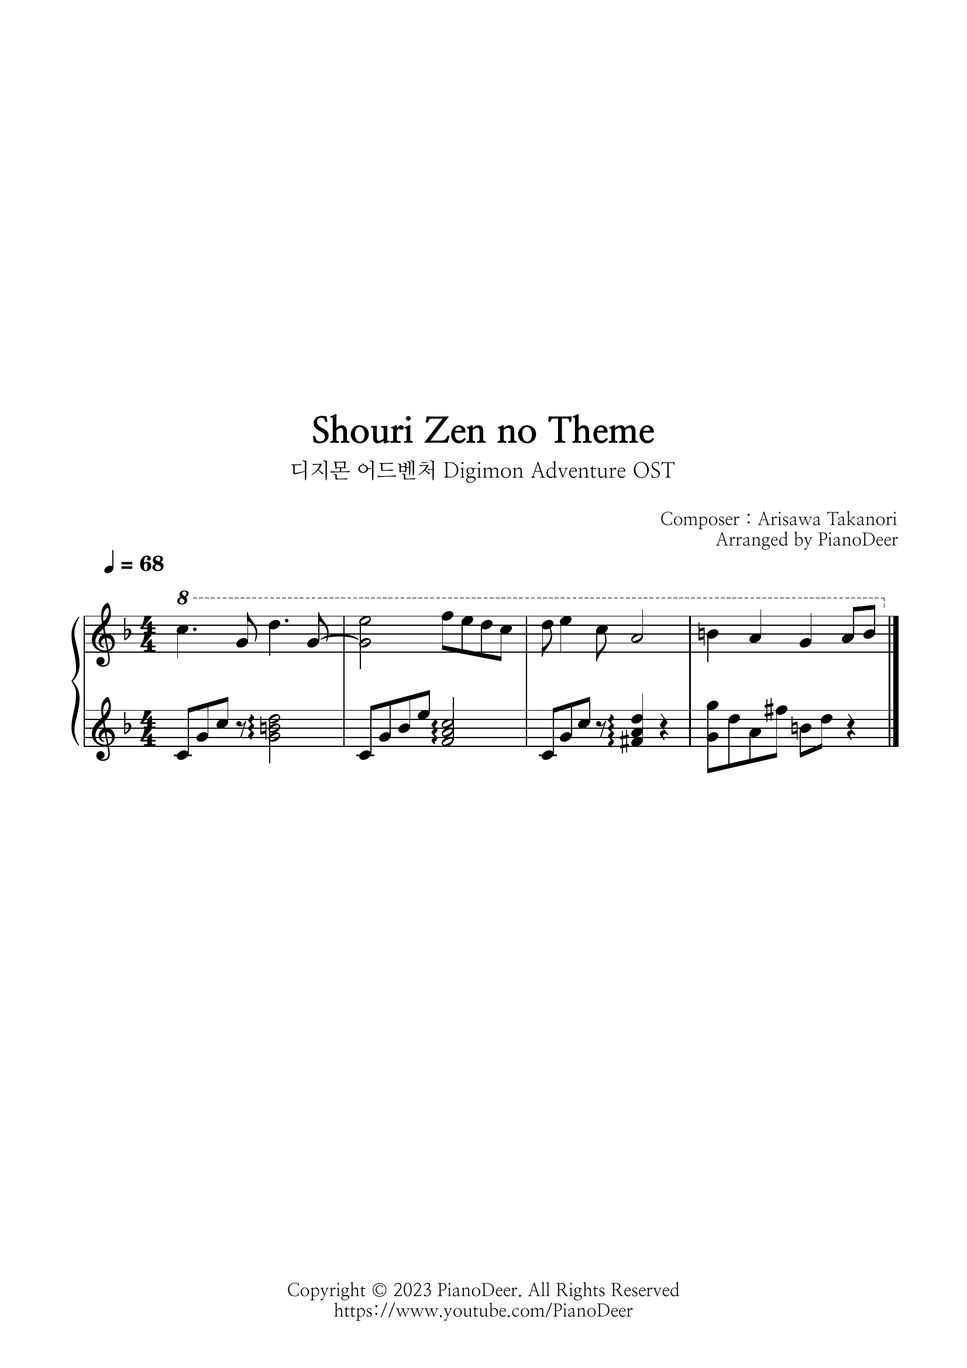 Digimon Adventure OST - Shouri Zen no Theme by PianoDeer